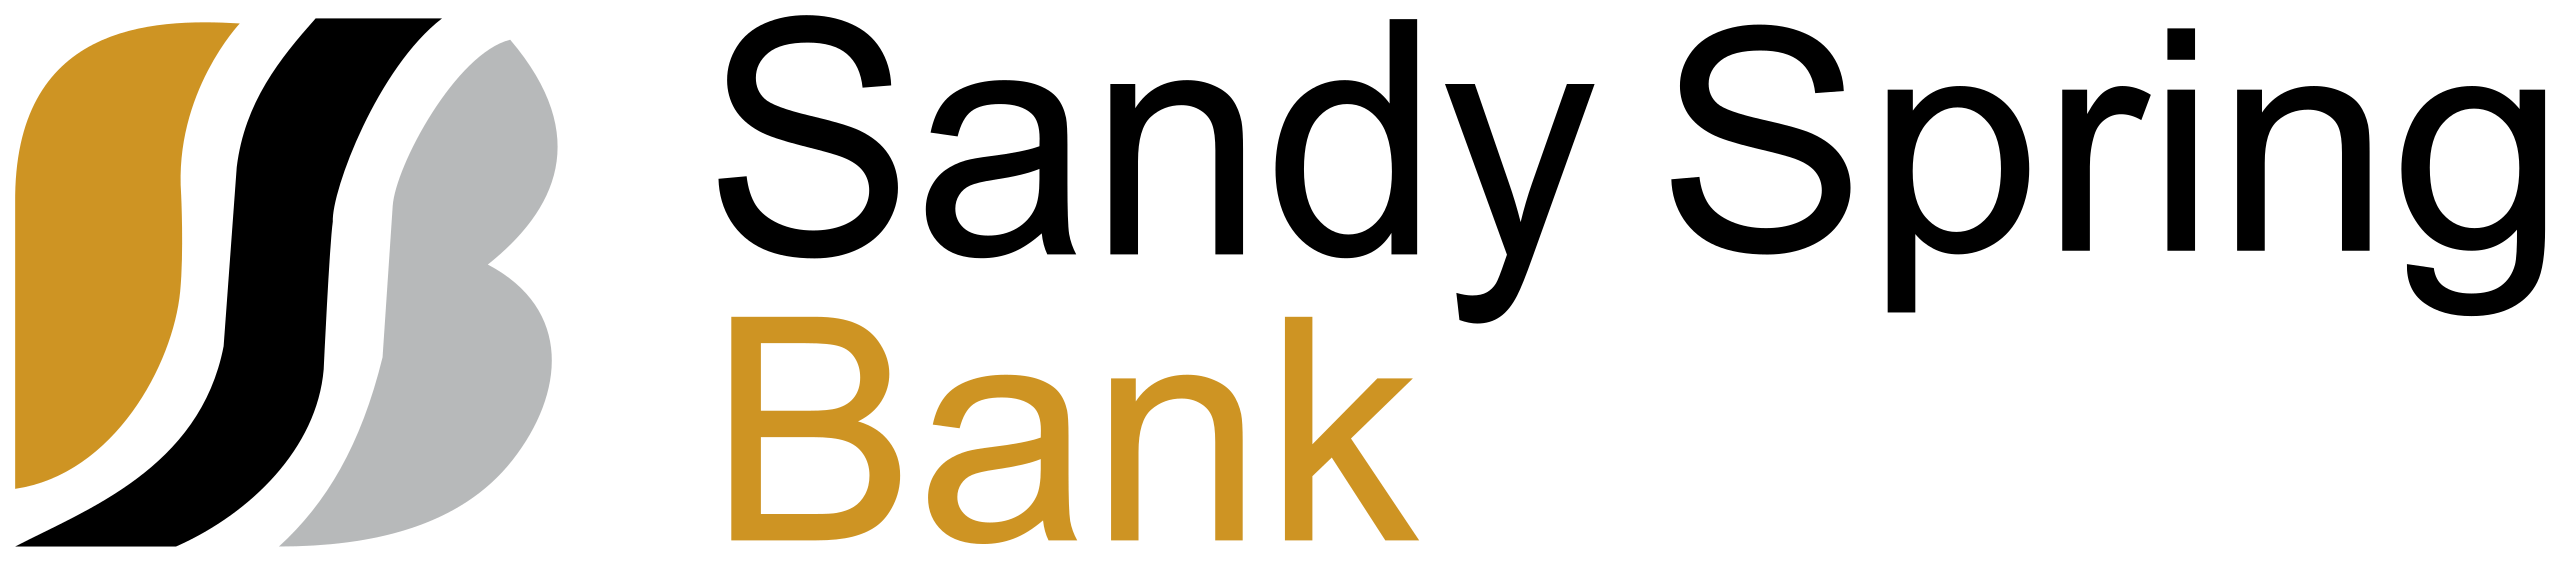 Spring bank. Sandy Springs. Sandy логотип. Synchrony Bank логотип. Blanc Bank логотип.